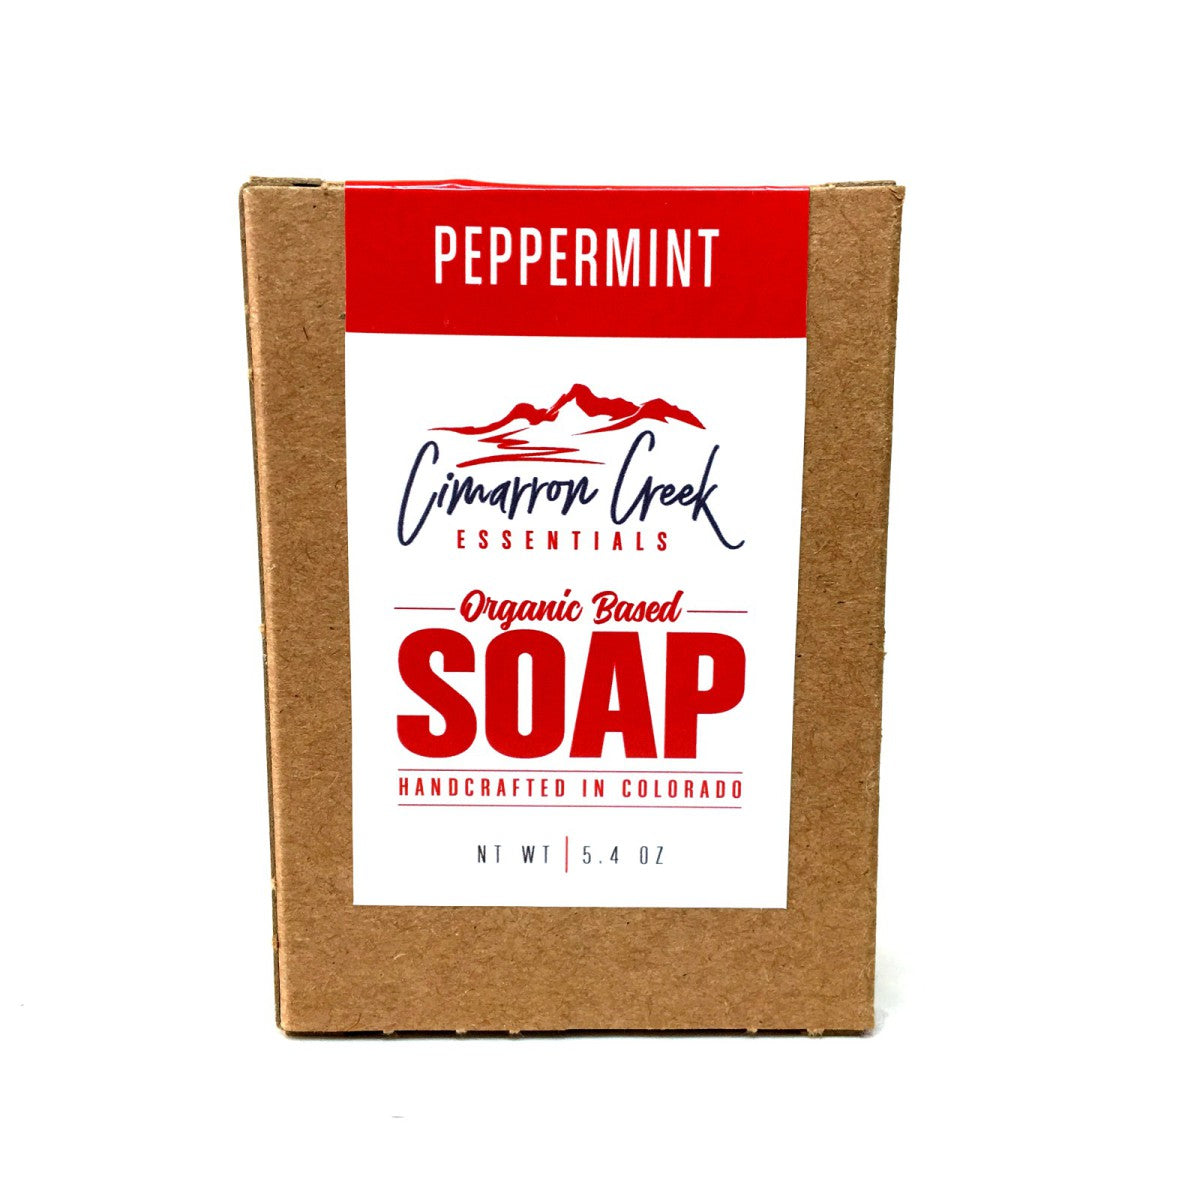 Peppermint Organic Bar Soap 5.4oz